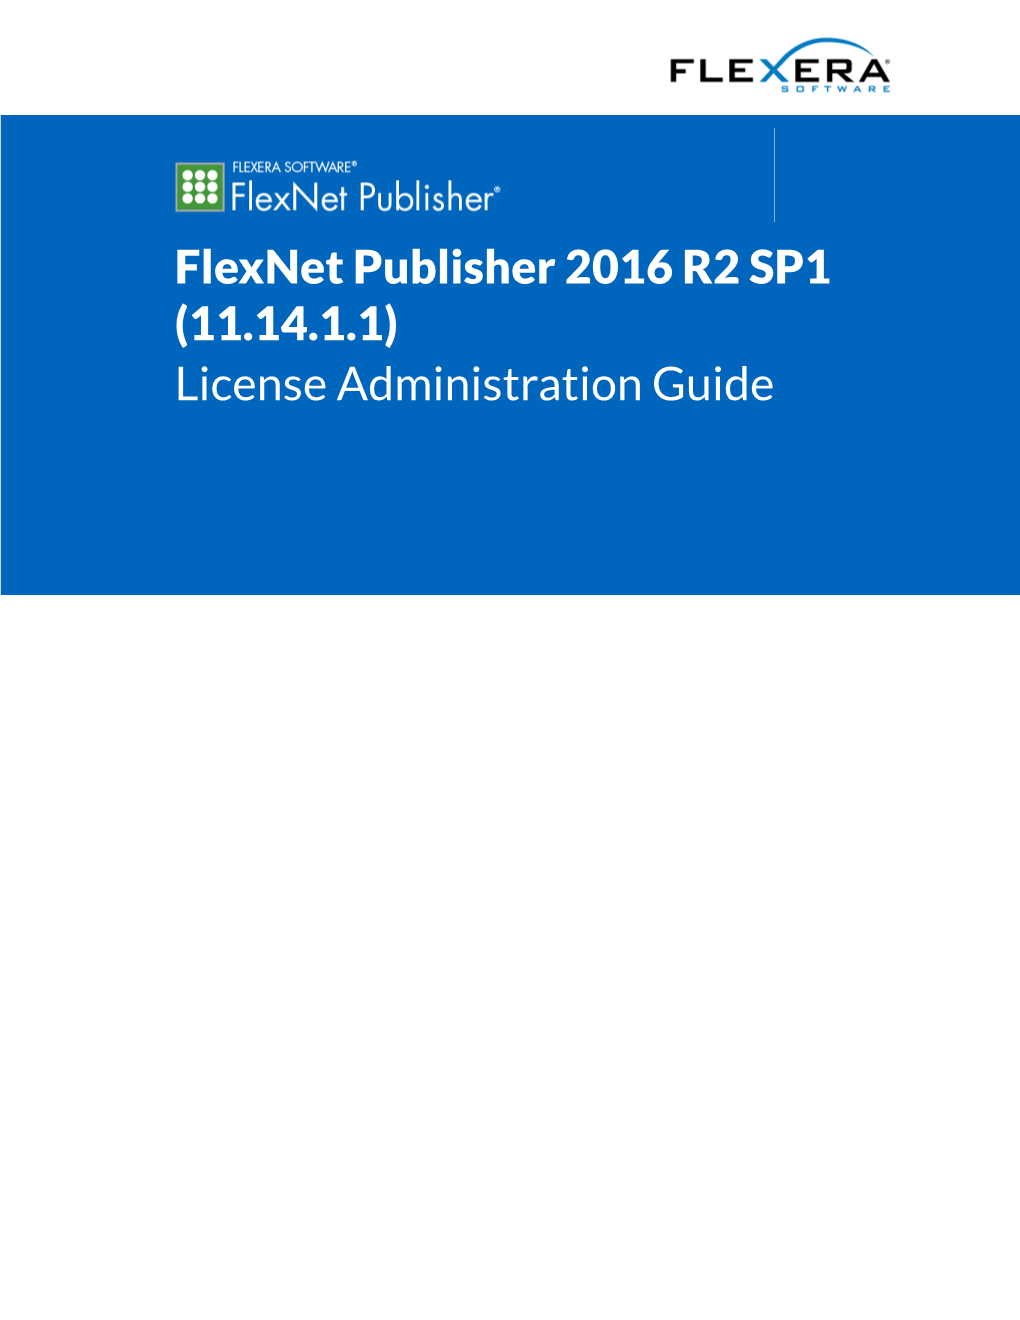 Flexnet Publisher: License Administration Guide